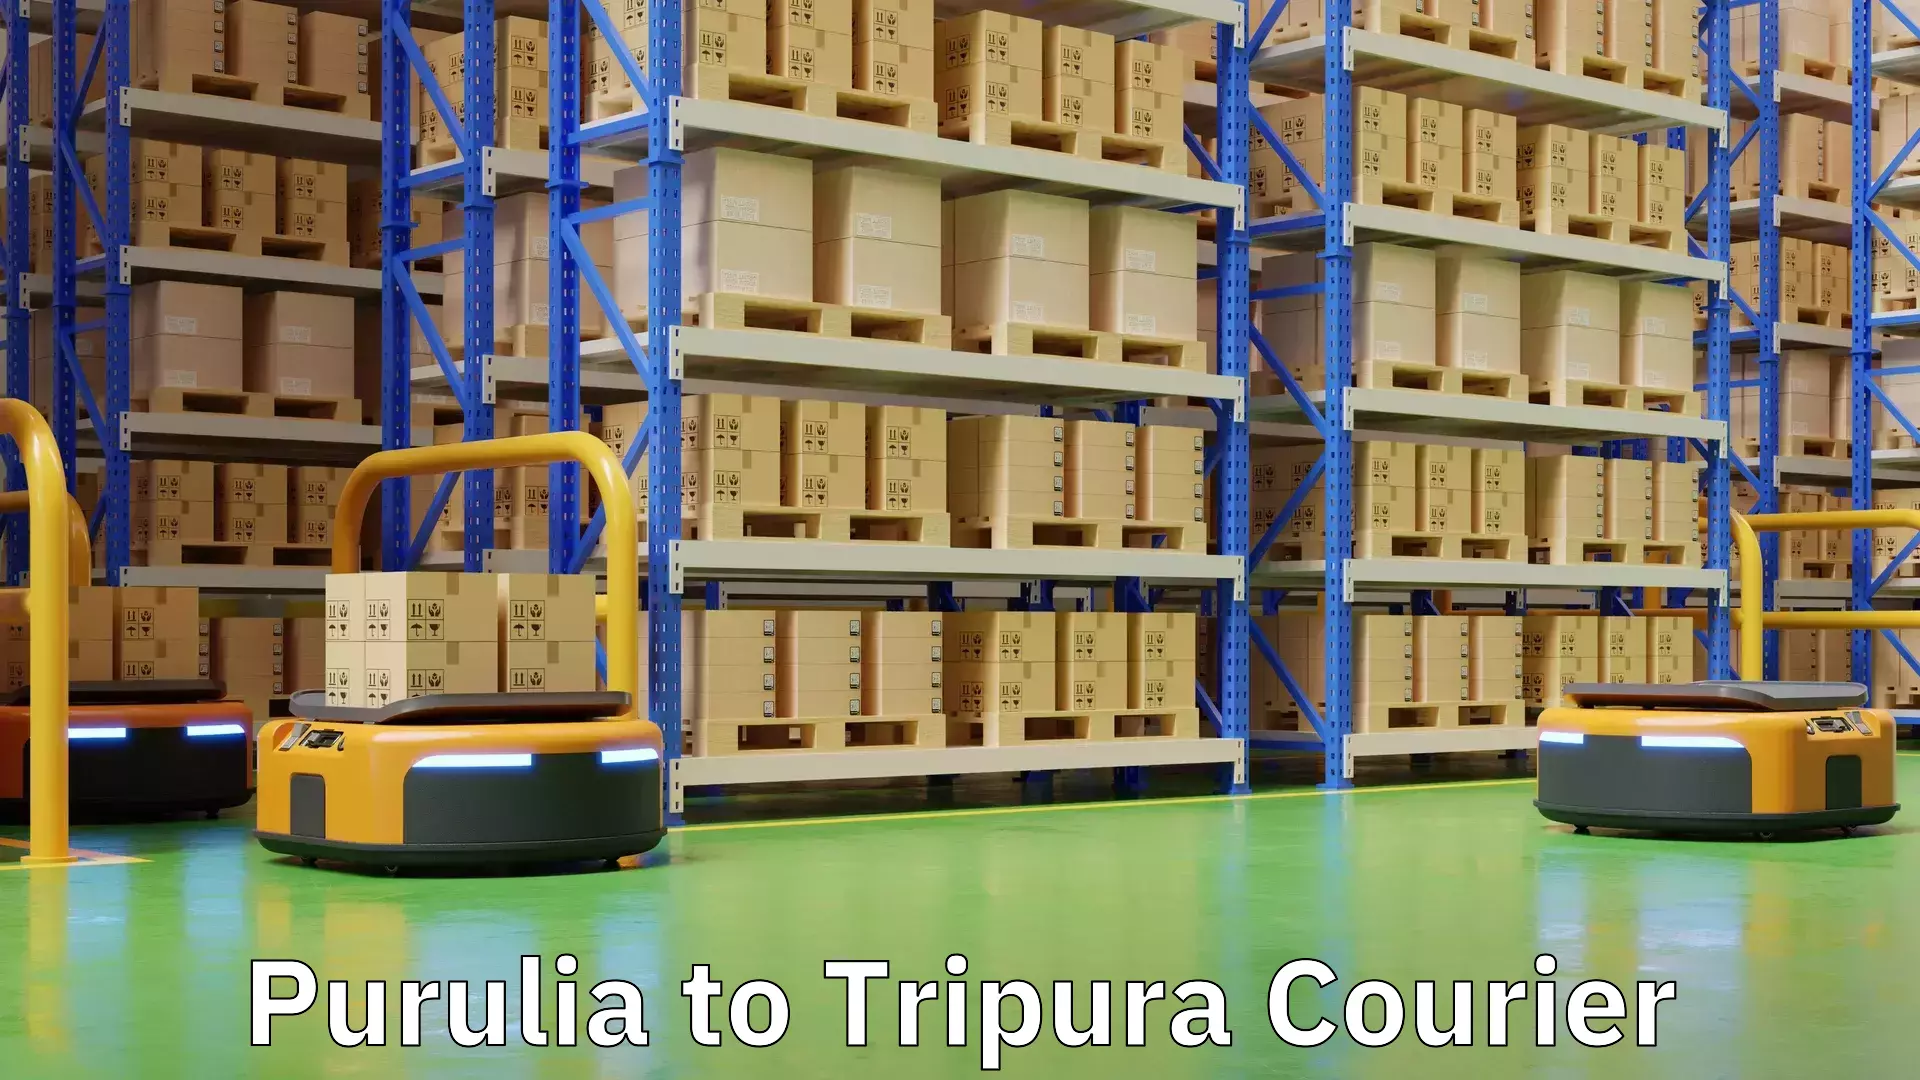 Express delivery capabilities Purulia to Tripura